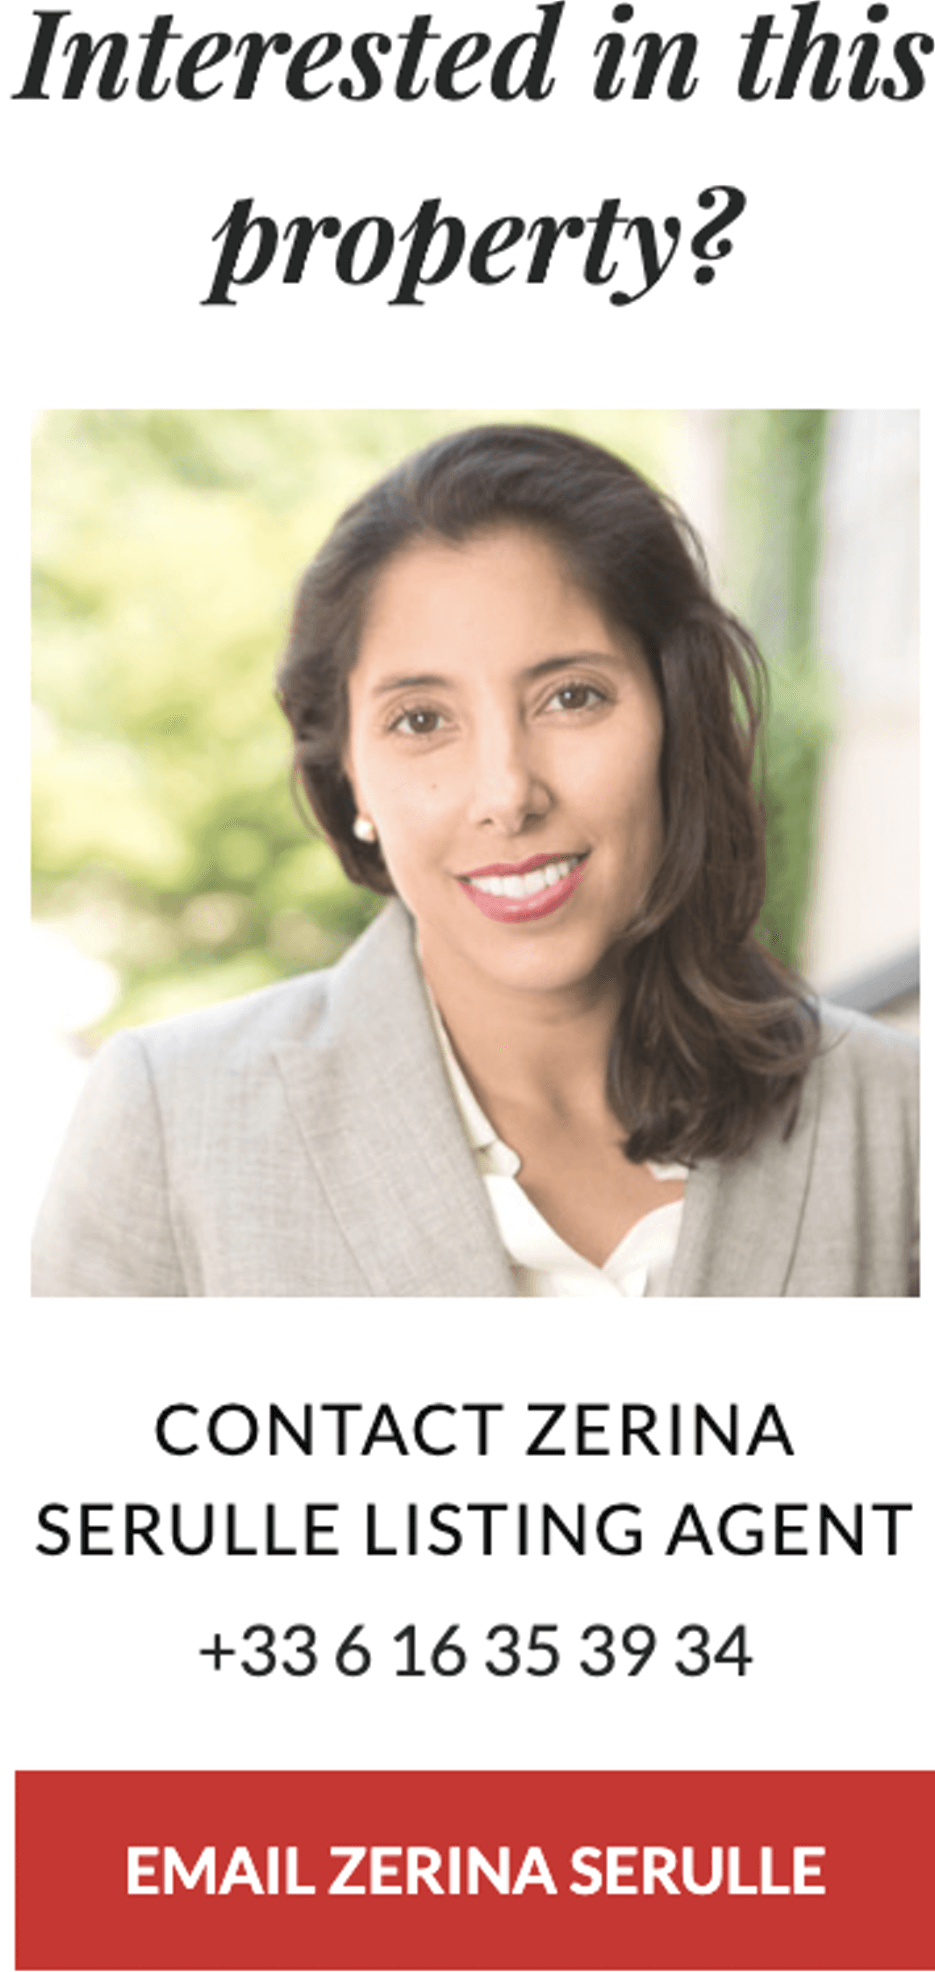 Adrian Leeds listing agent, Zerina Serulle